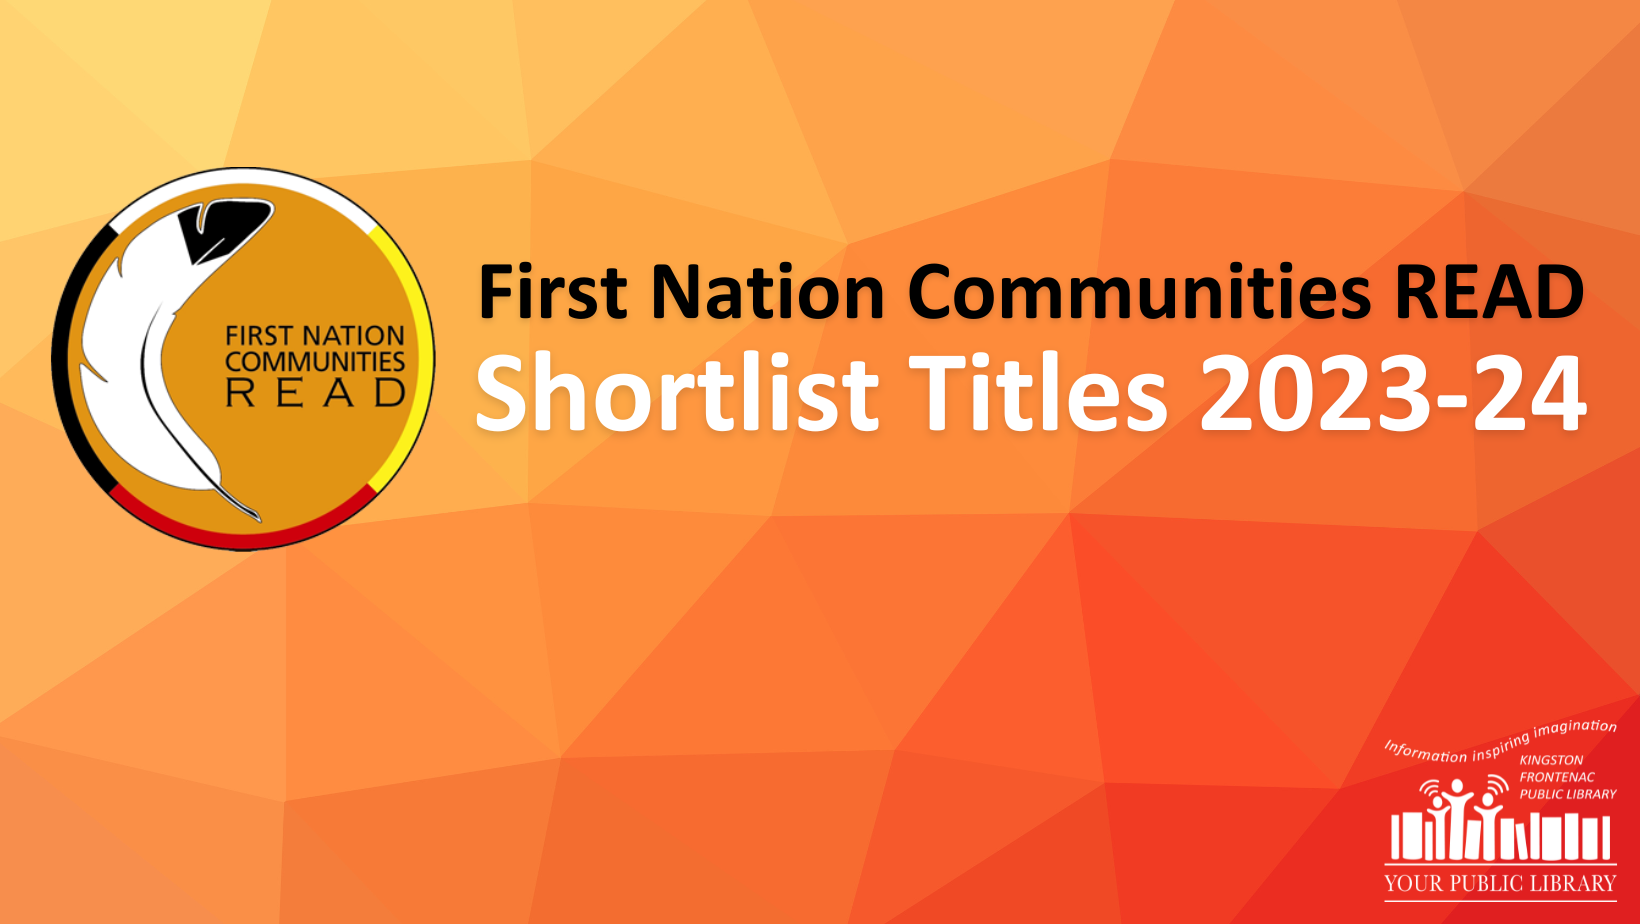 First Nation Communities READ Shortlist Titles 2023-24 on an orange background. 